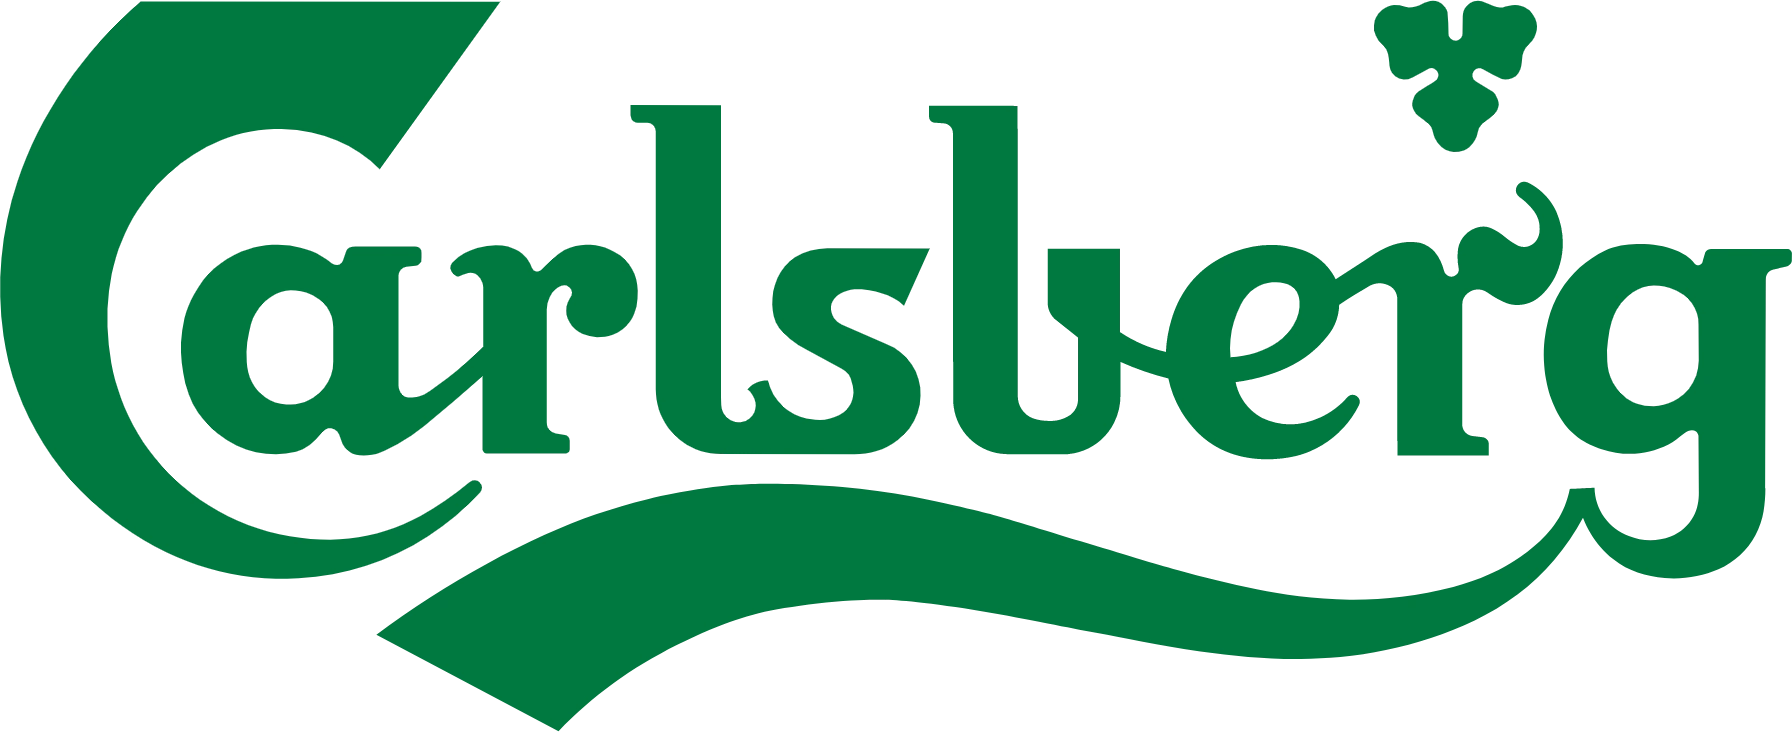 carlsberg logo